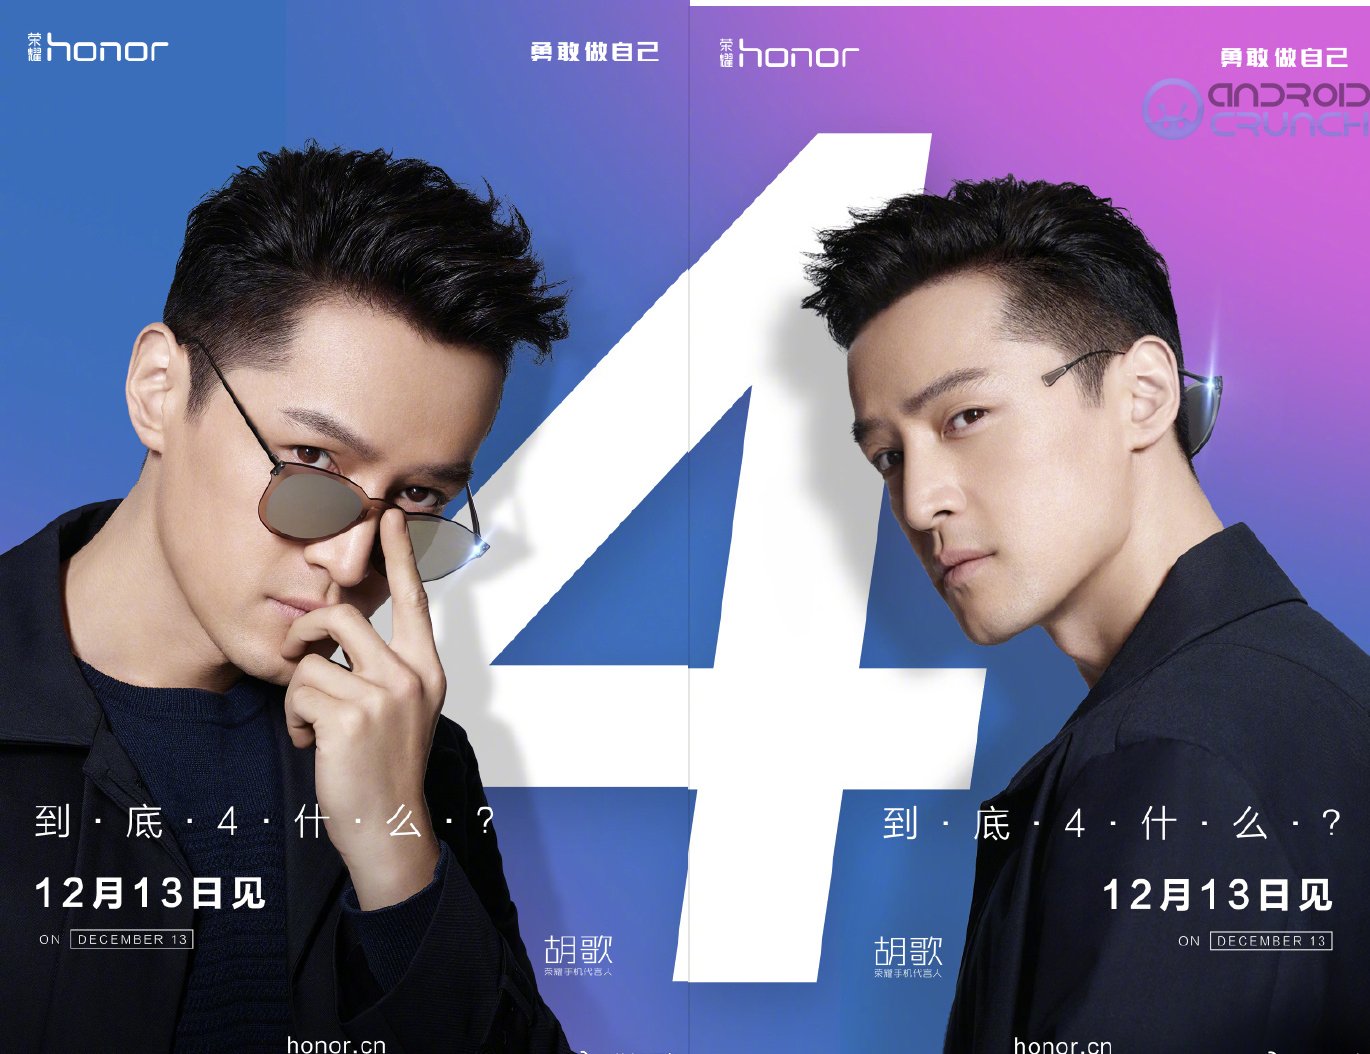 Honor December 13 launch official teaser